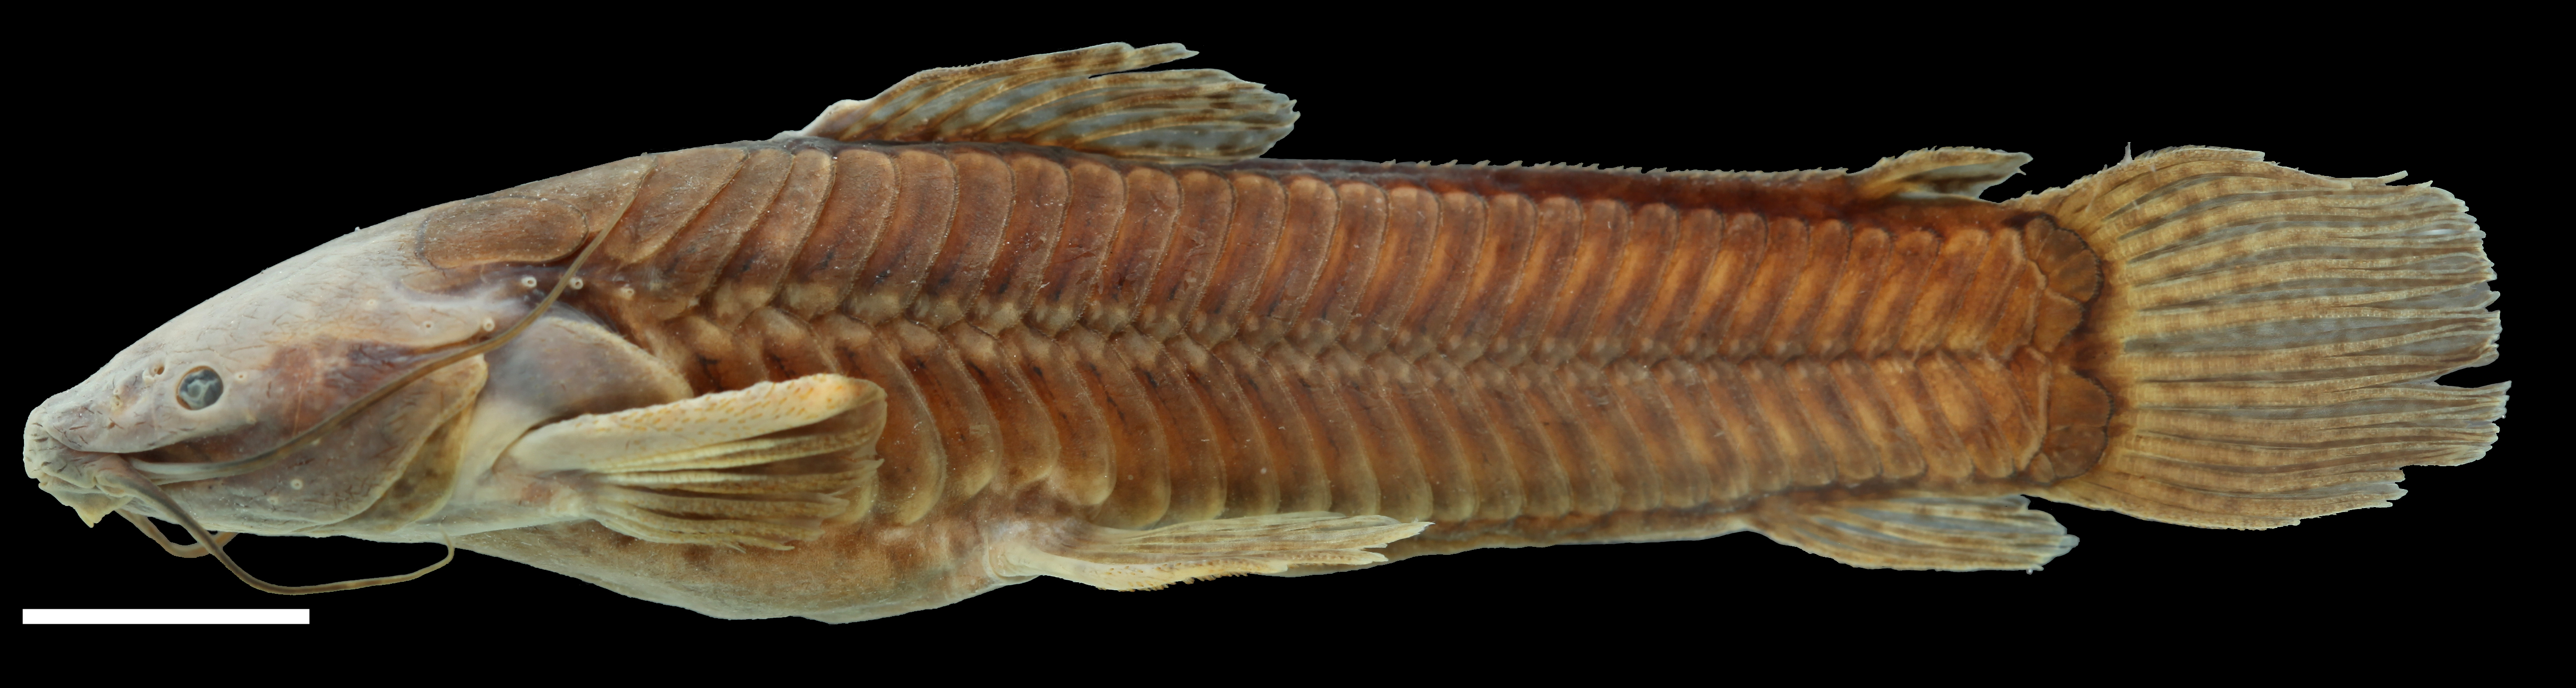 Paratype of <em>Callichthys oibaensis</em>, IAvH-P-5730_Lateral, 72.8 mm SL (scale bar = 1 cm). Photograph by C. DoNascimiento